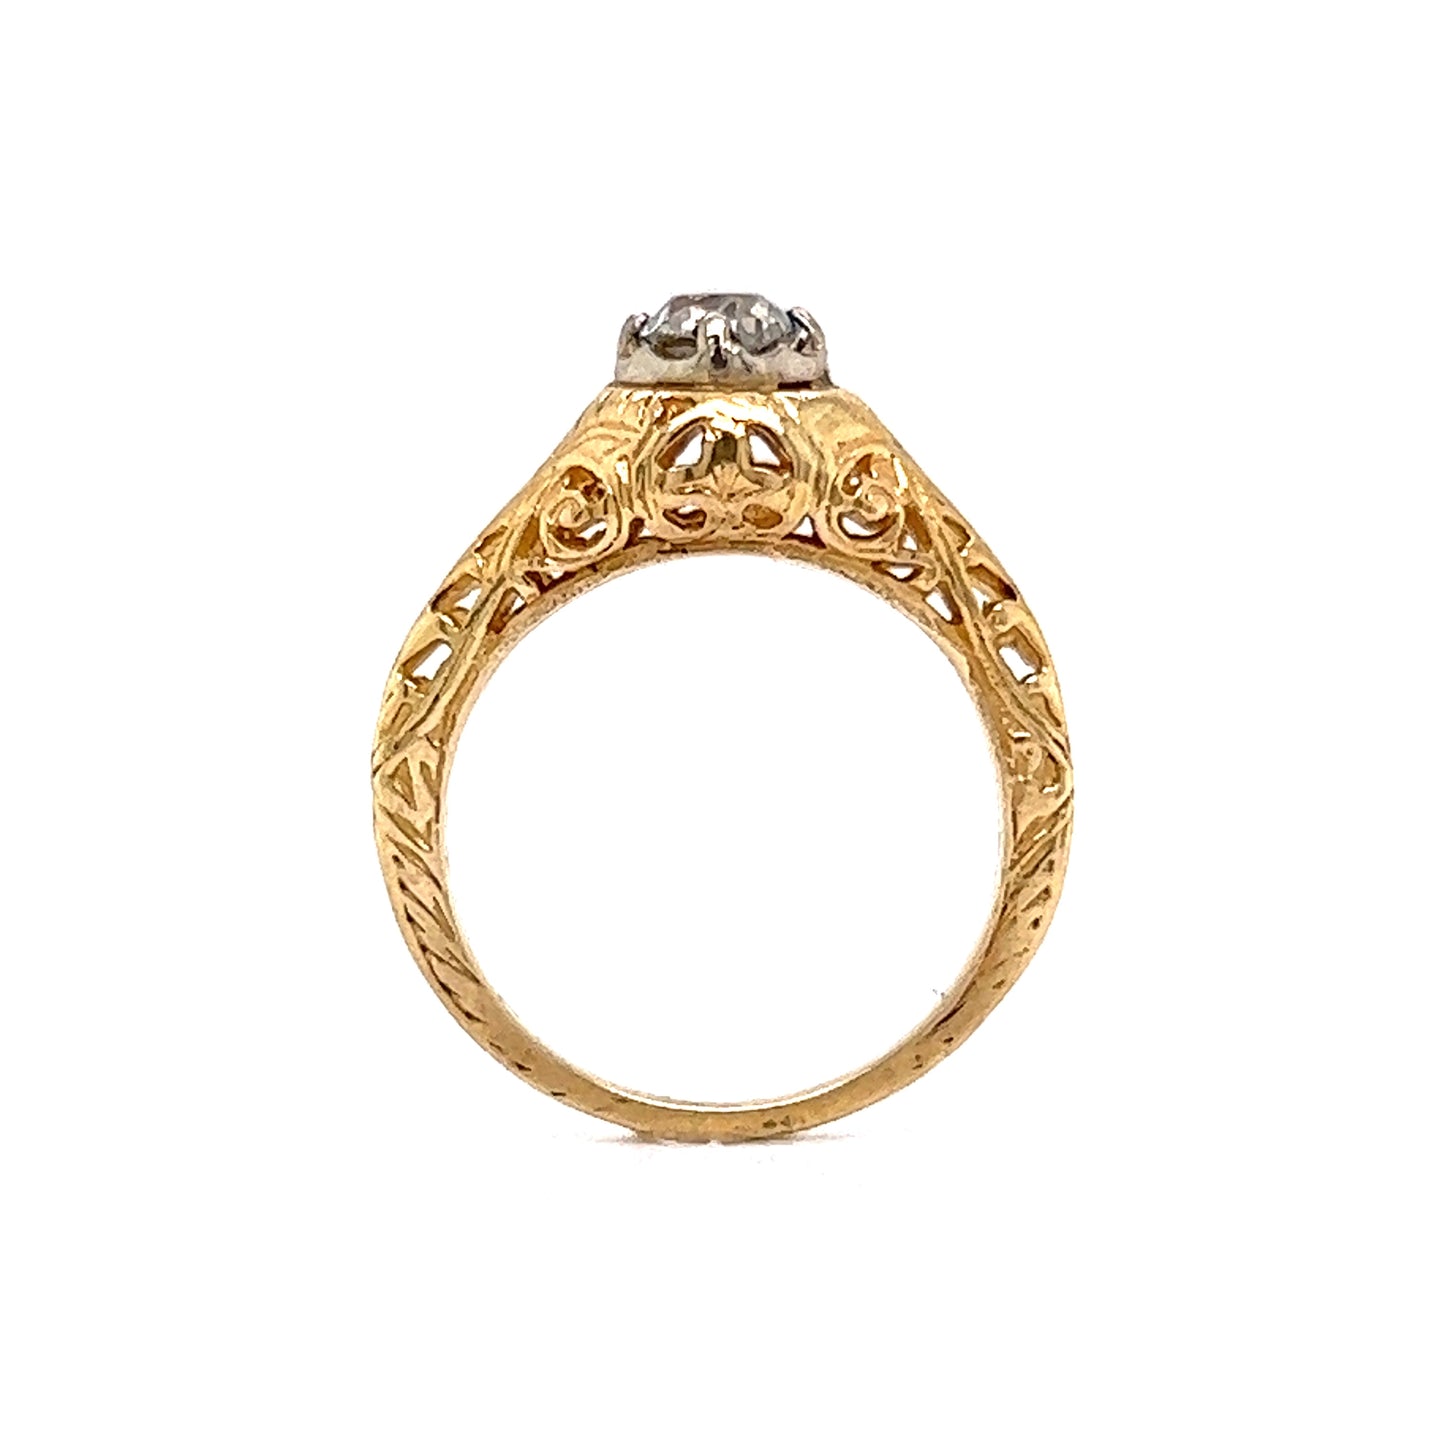 Vintage Half Carat Diamond Filigree Engagement Ring in Yellow Gold